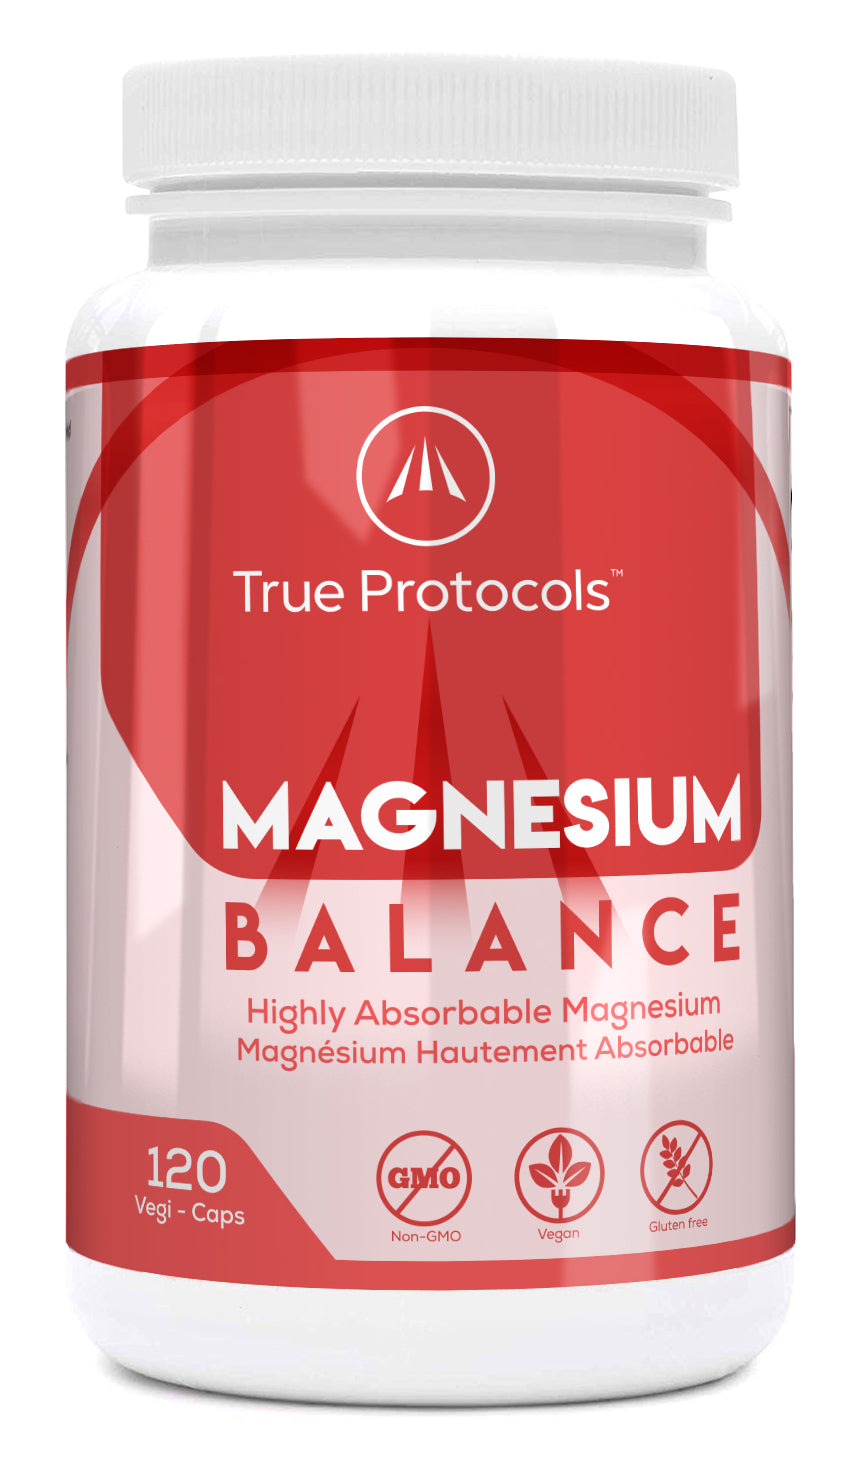 True Protocols Magnesium Balance